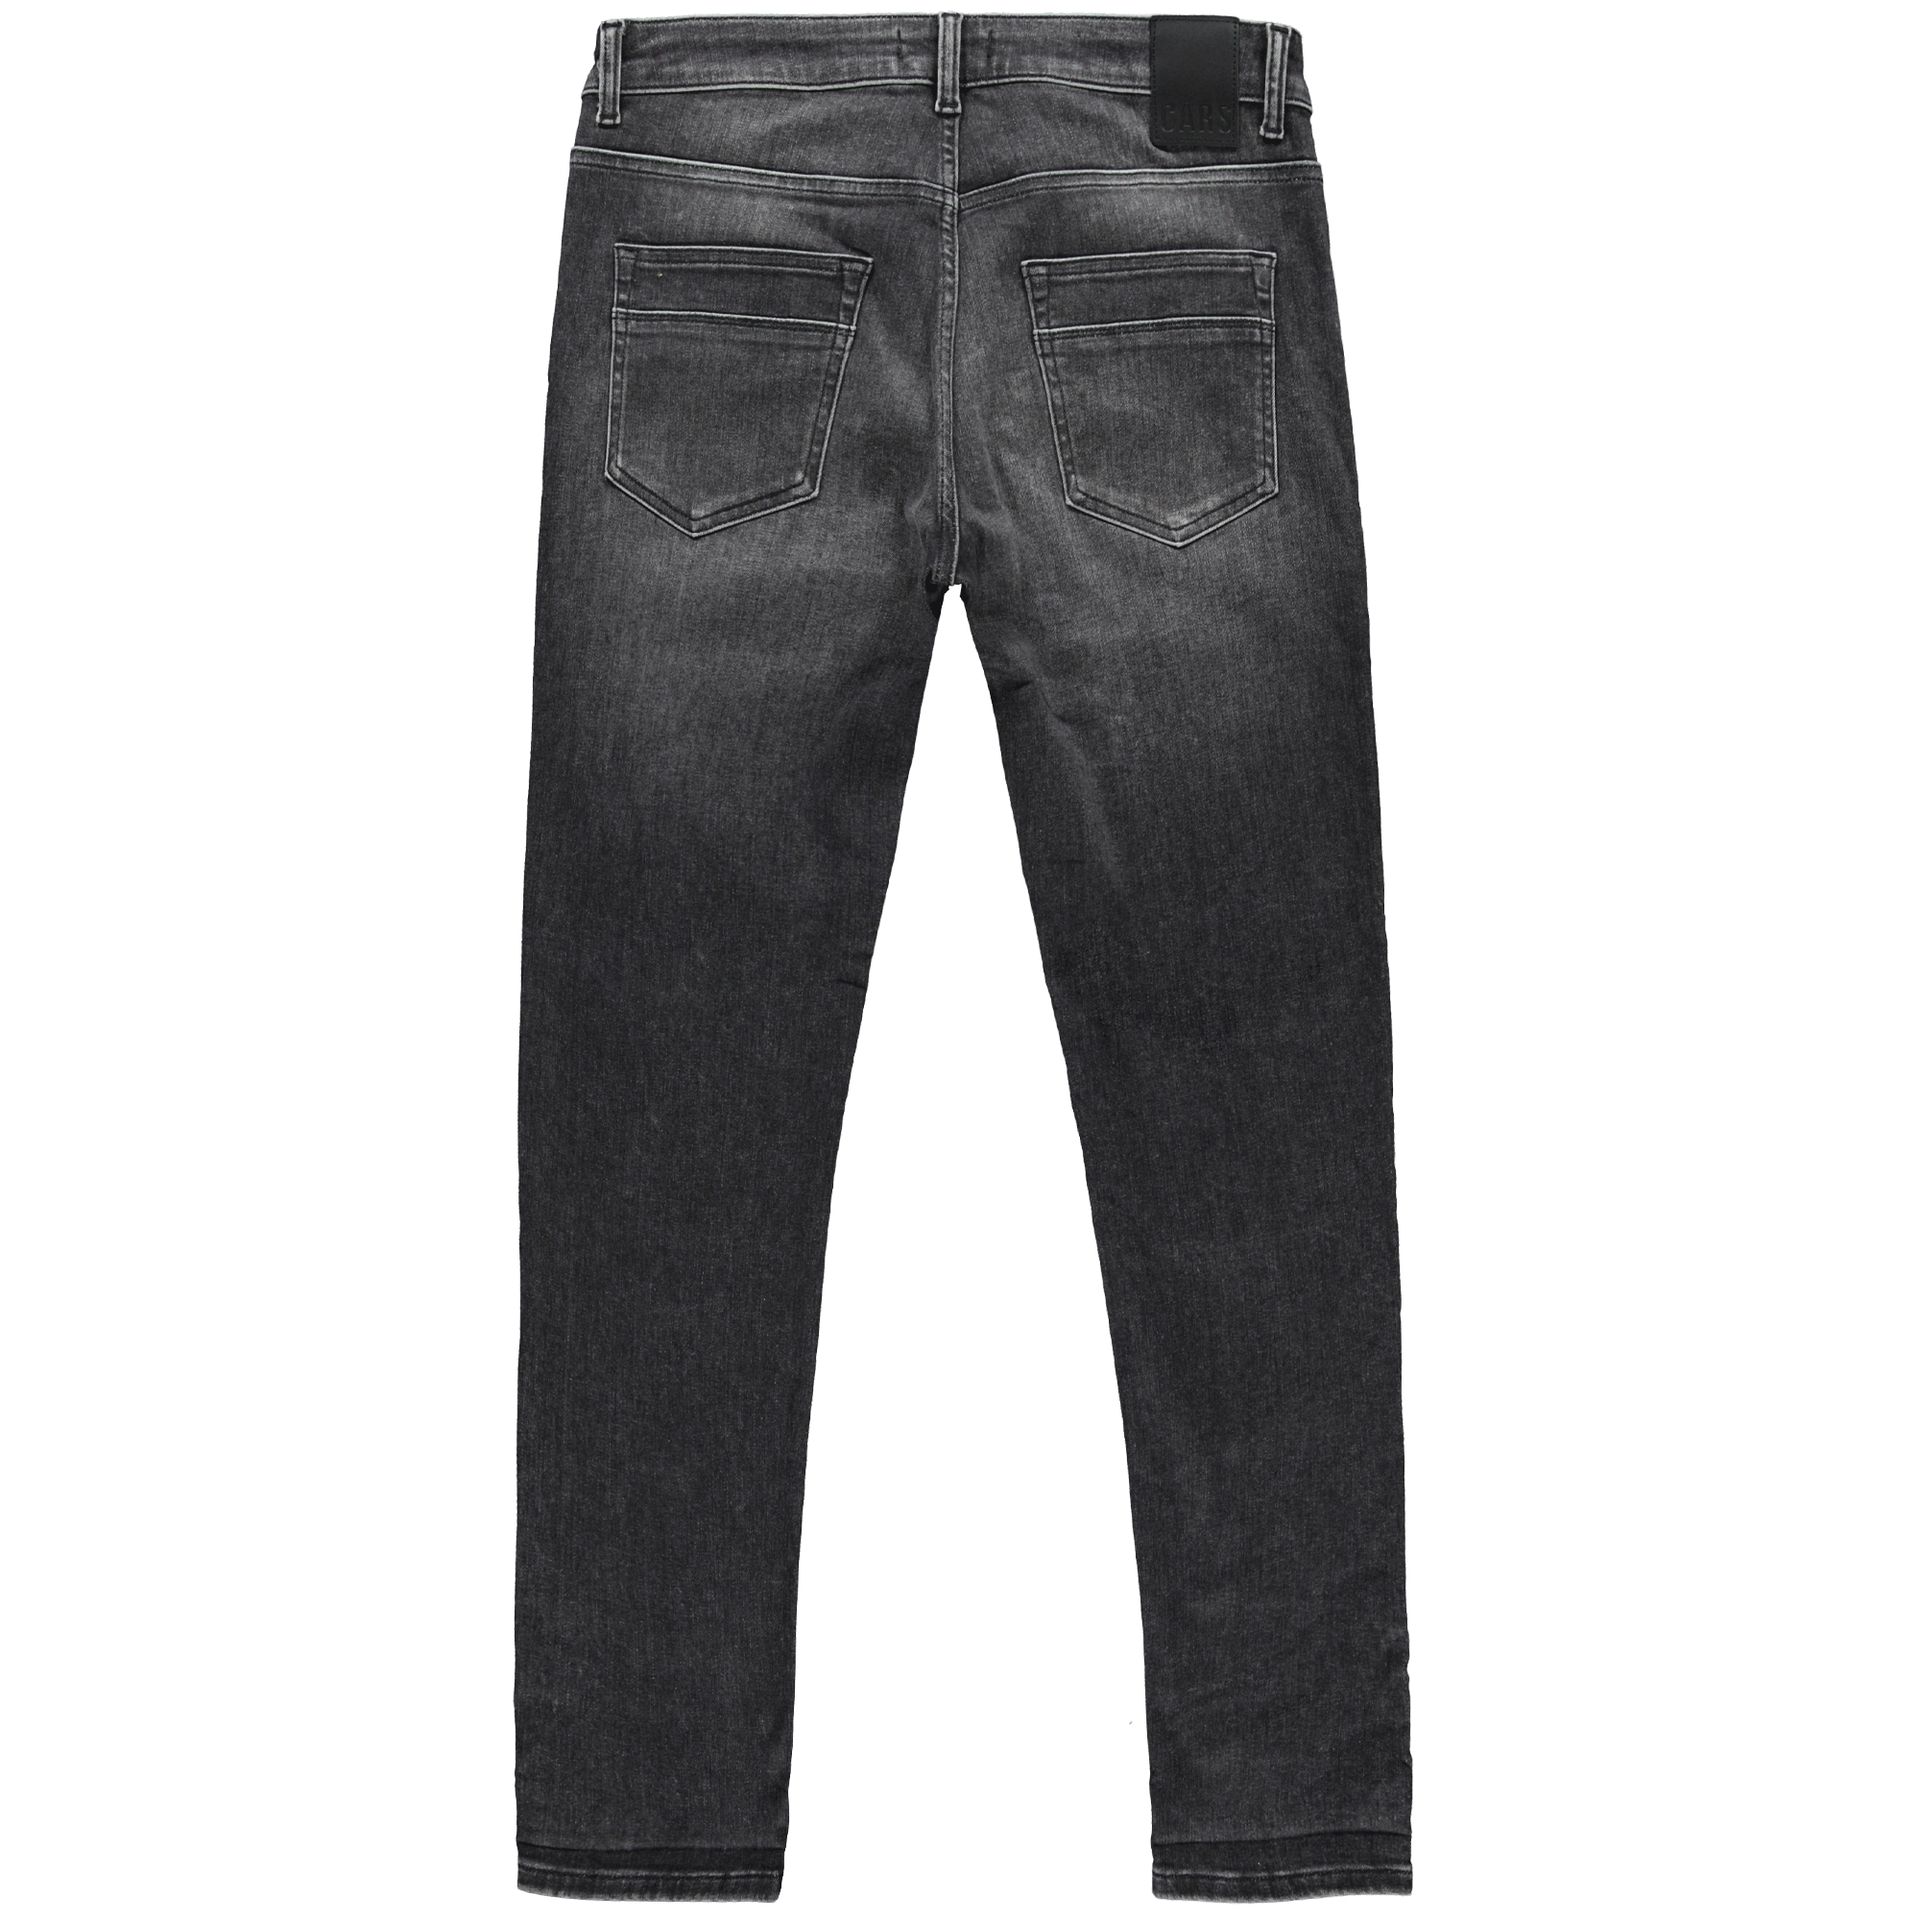 Cars jeans Jeans Bates Slim fit 41 black used 00102503-EKA03000200000011